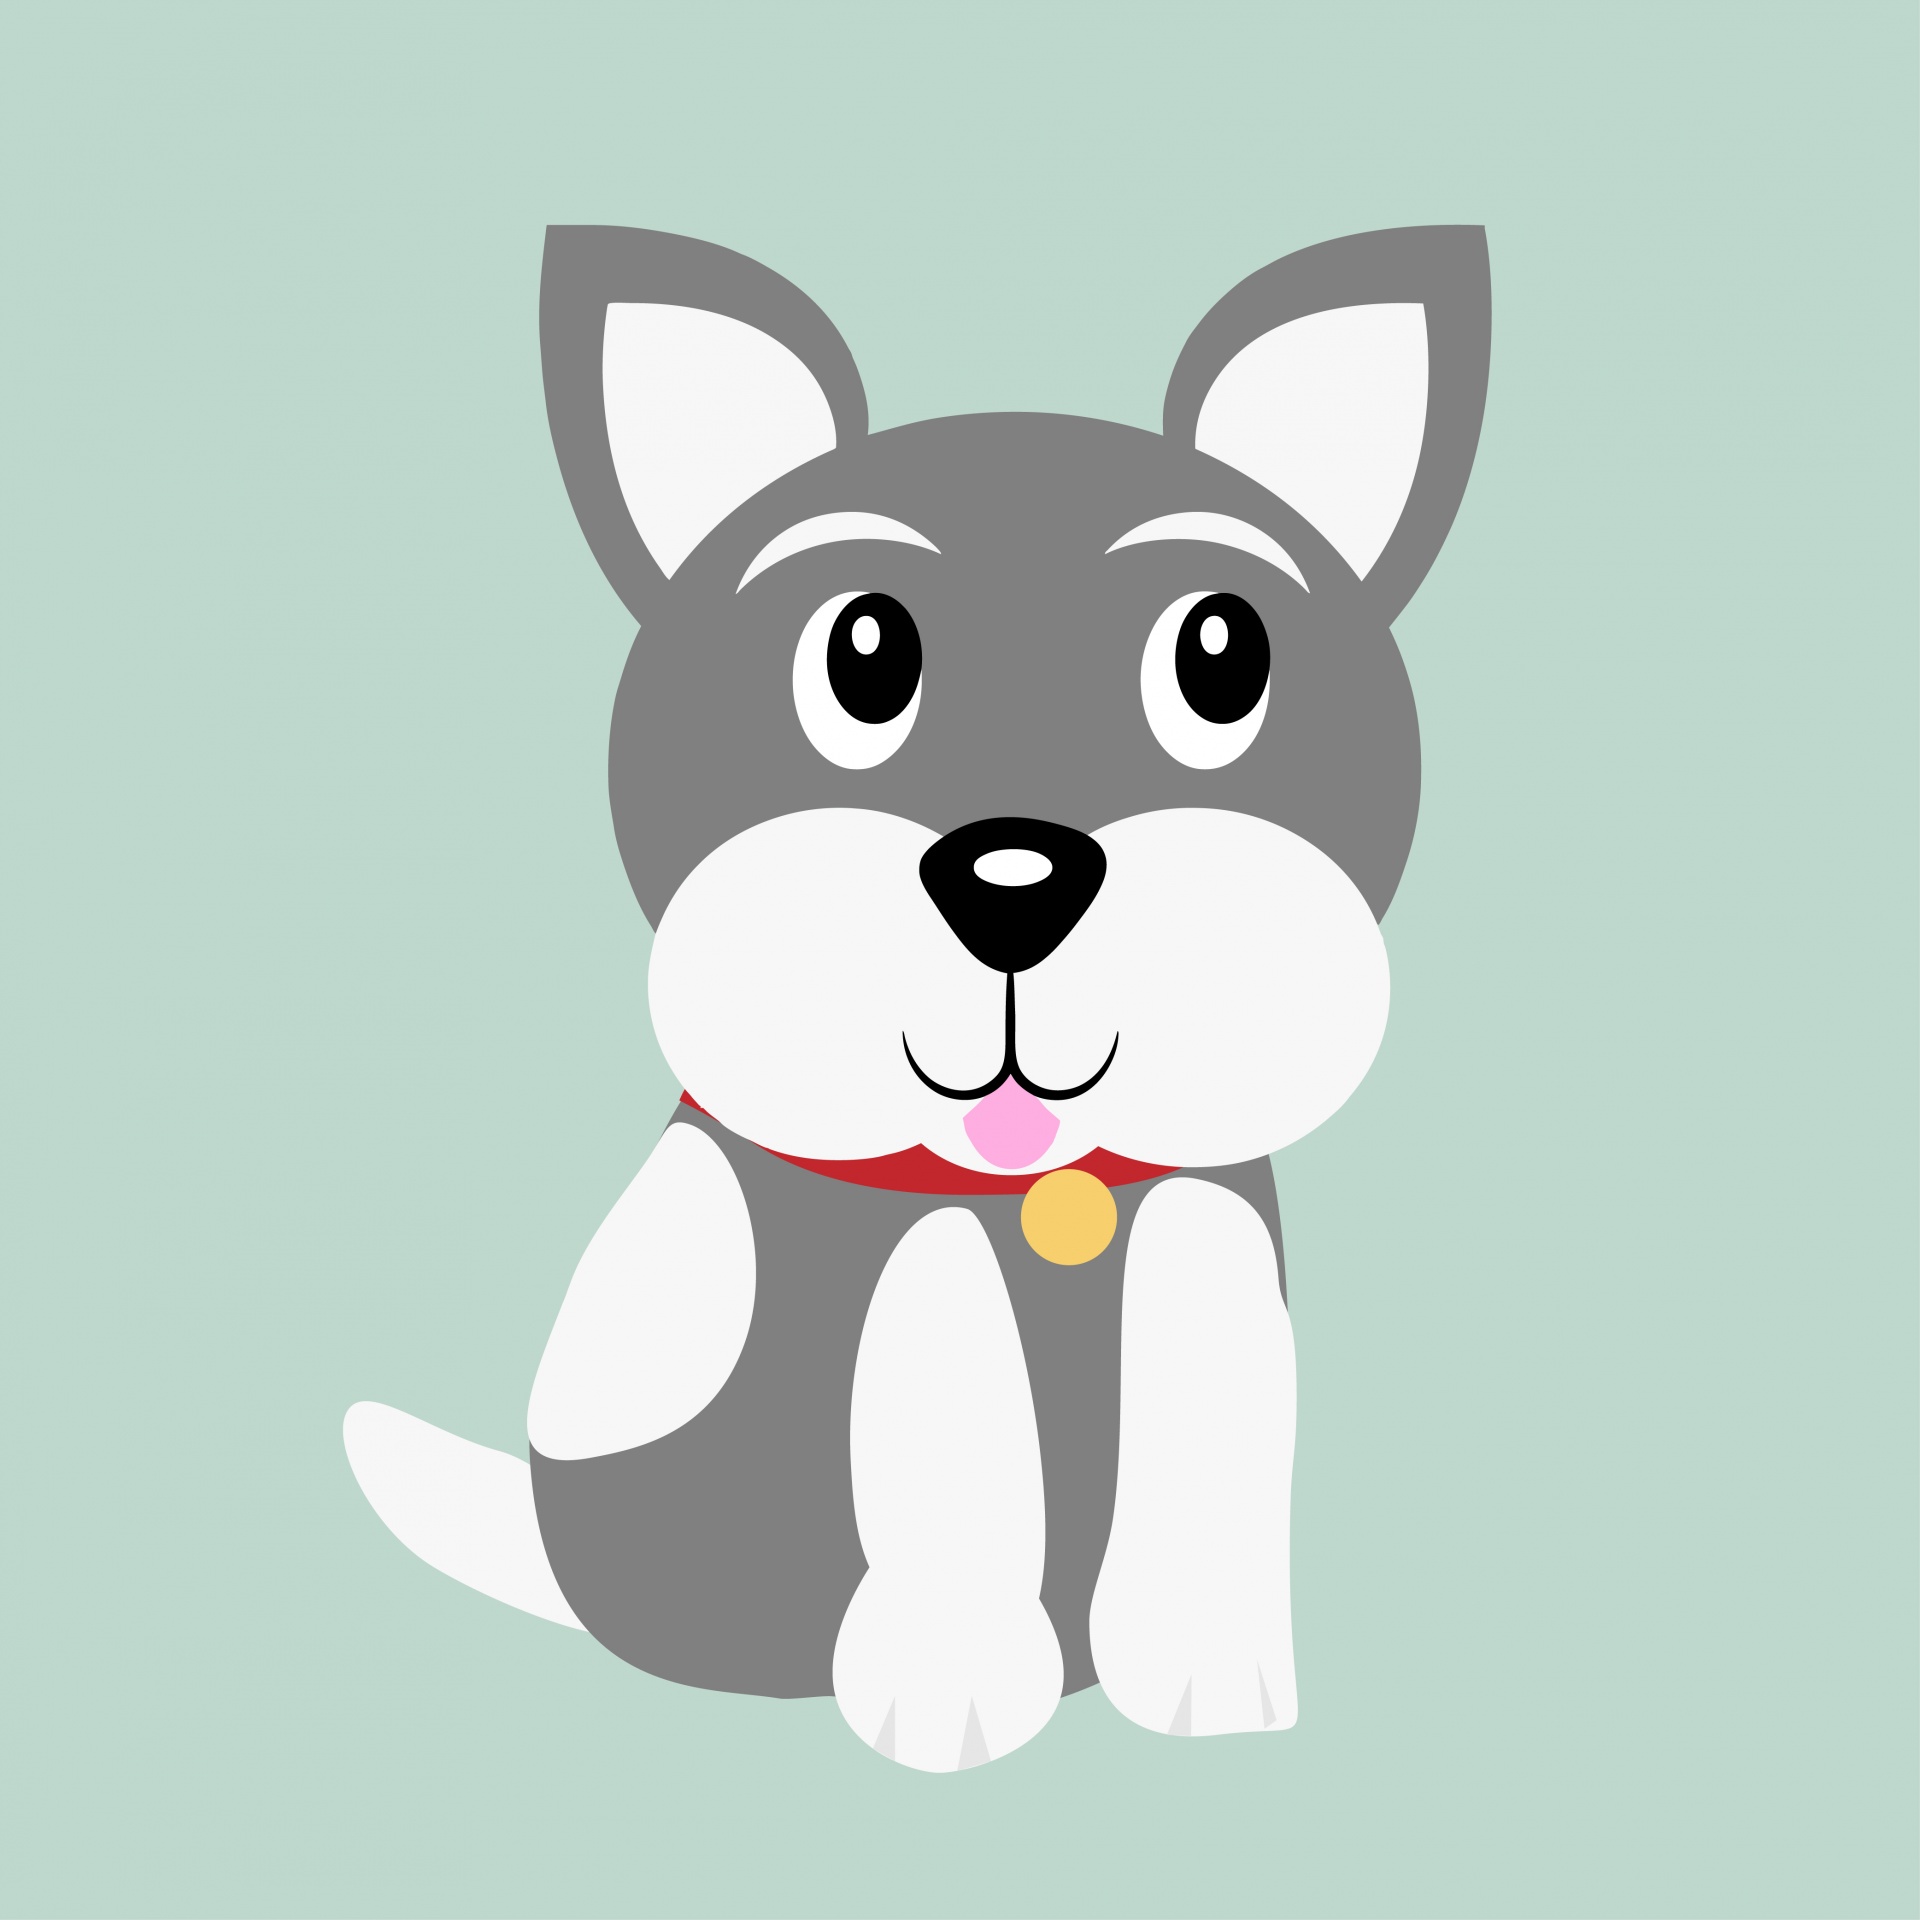 Dog, Puppy Illustration Cartoon Free Stock Photo - Public ...